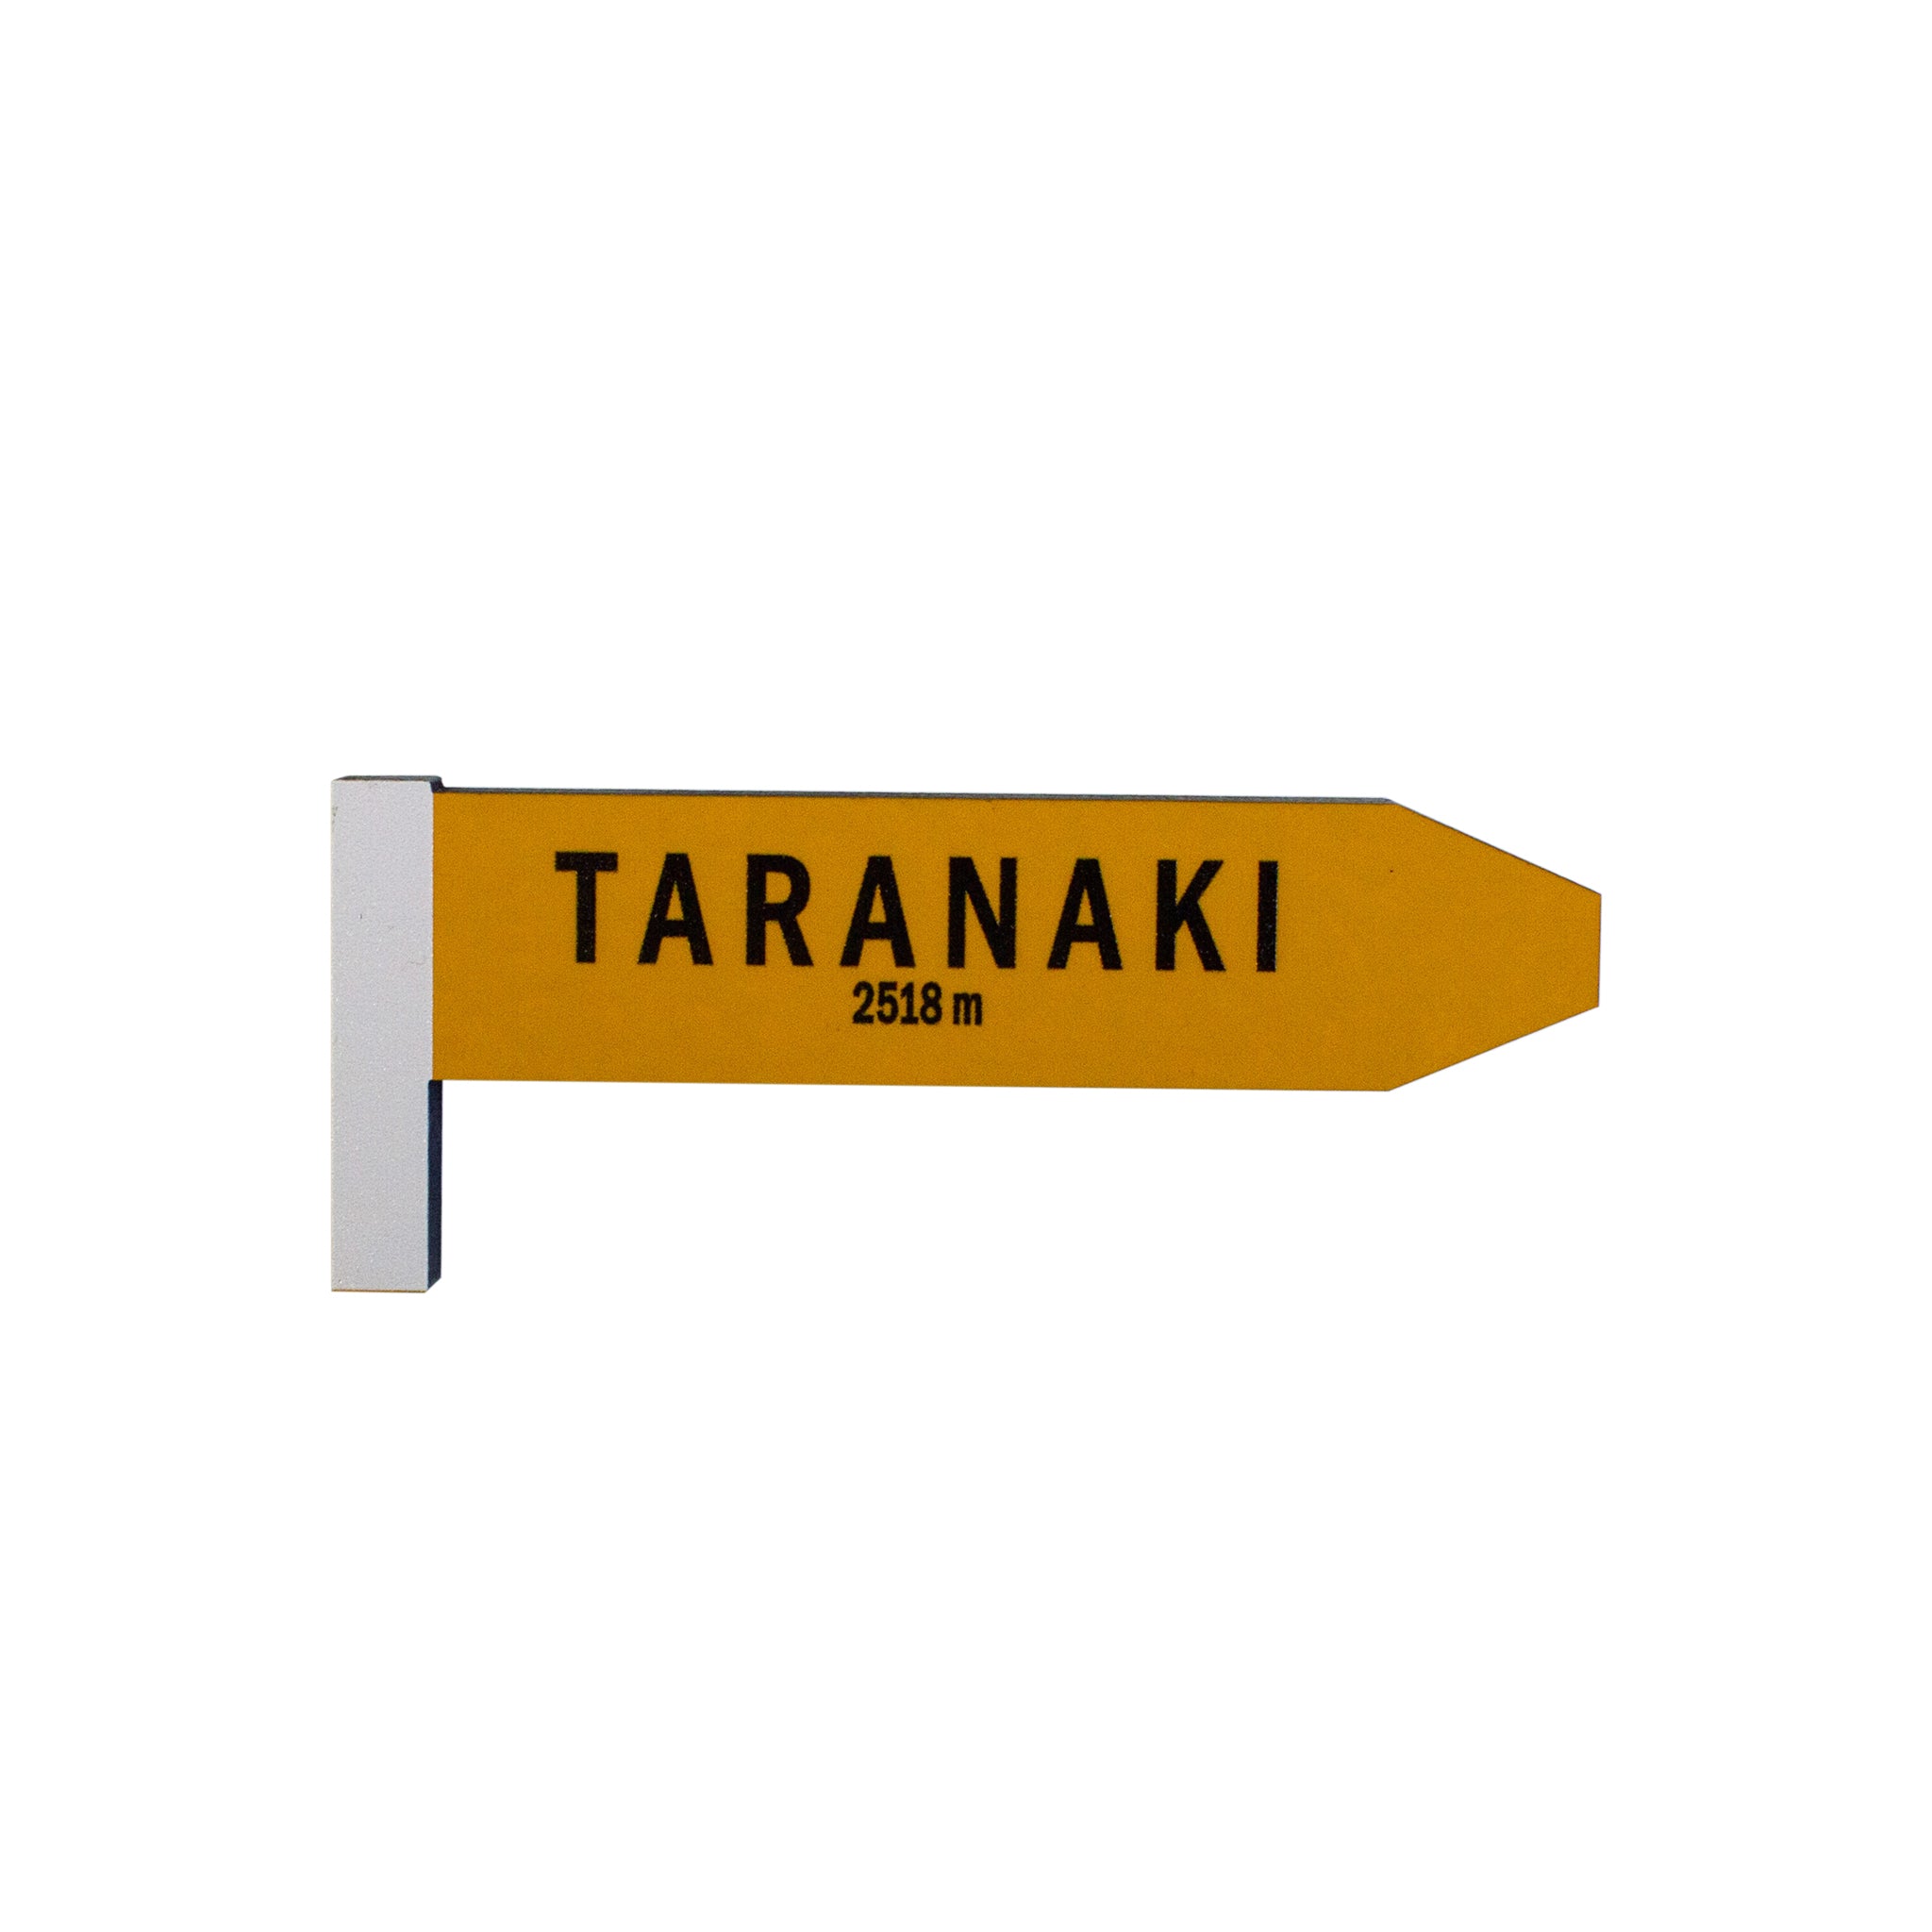 Give Me A Sign Taranaki Magnet